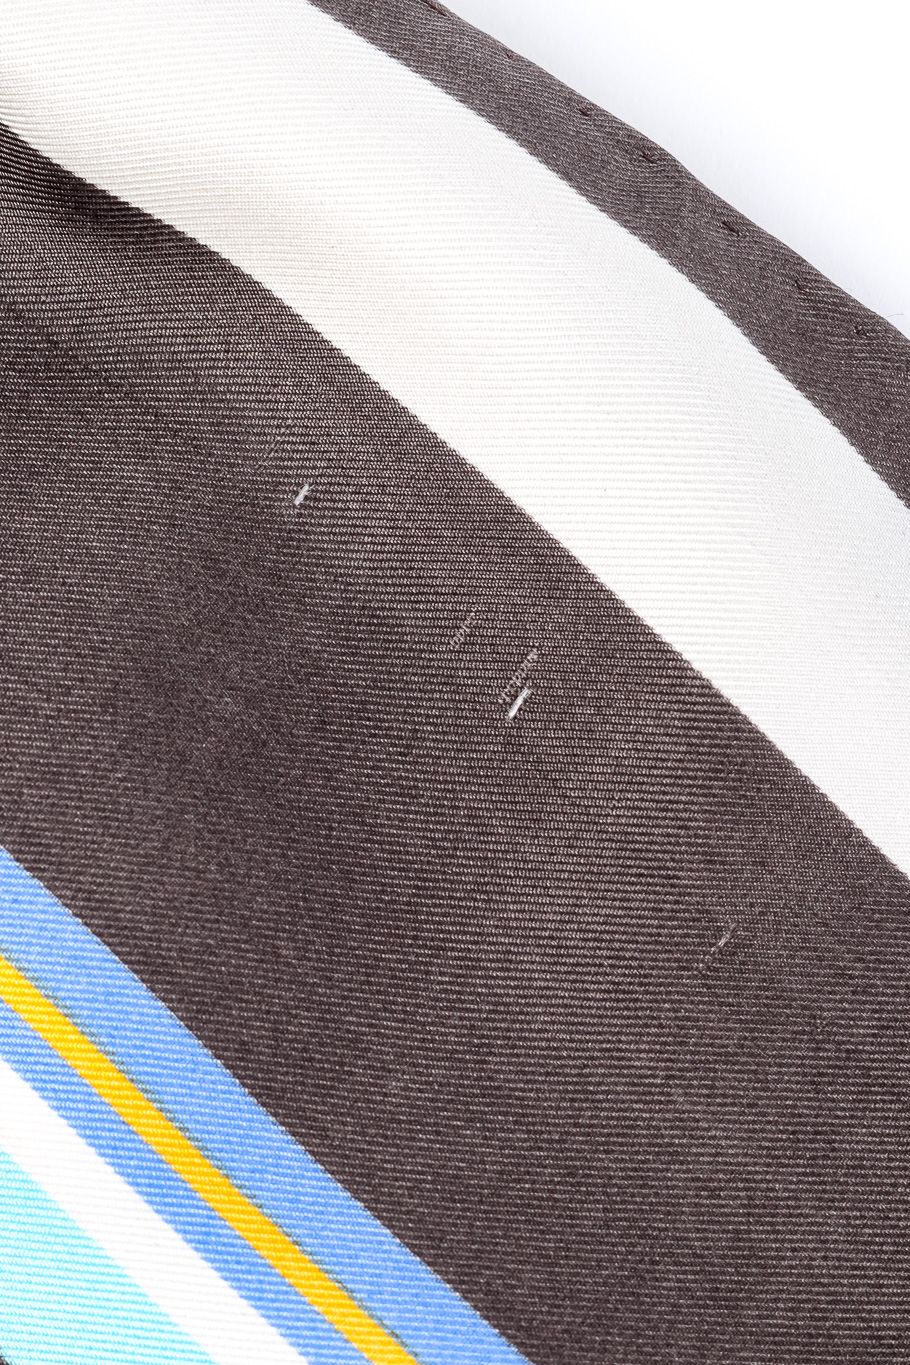 Striped Silk Scarf by Yves Saint Laurent small fabric run closeup @recessla